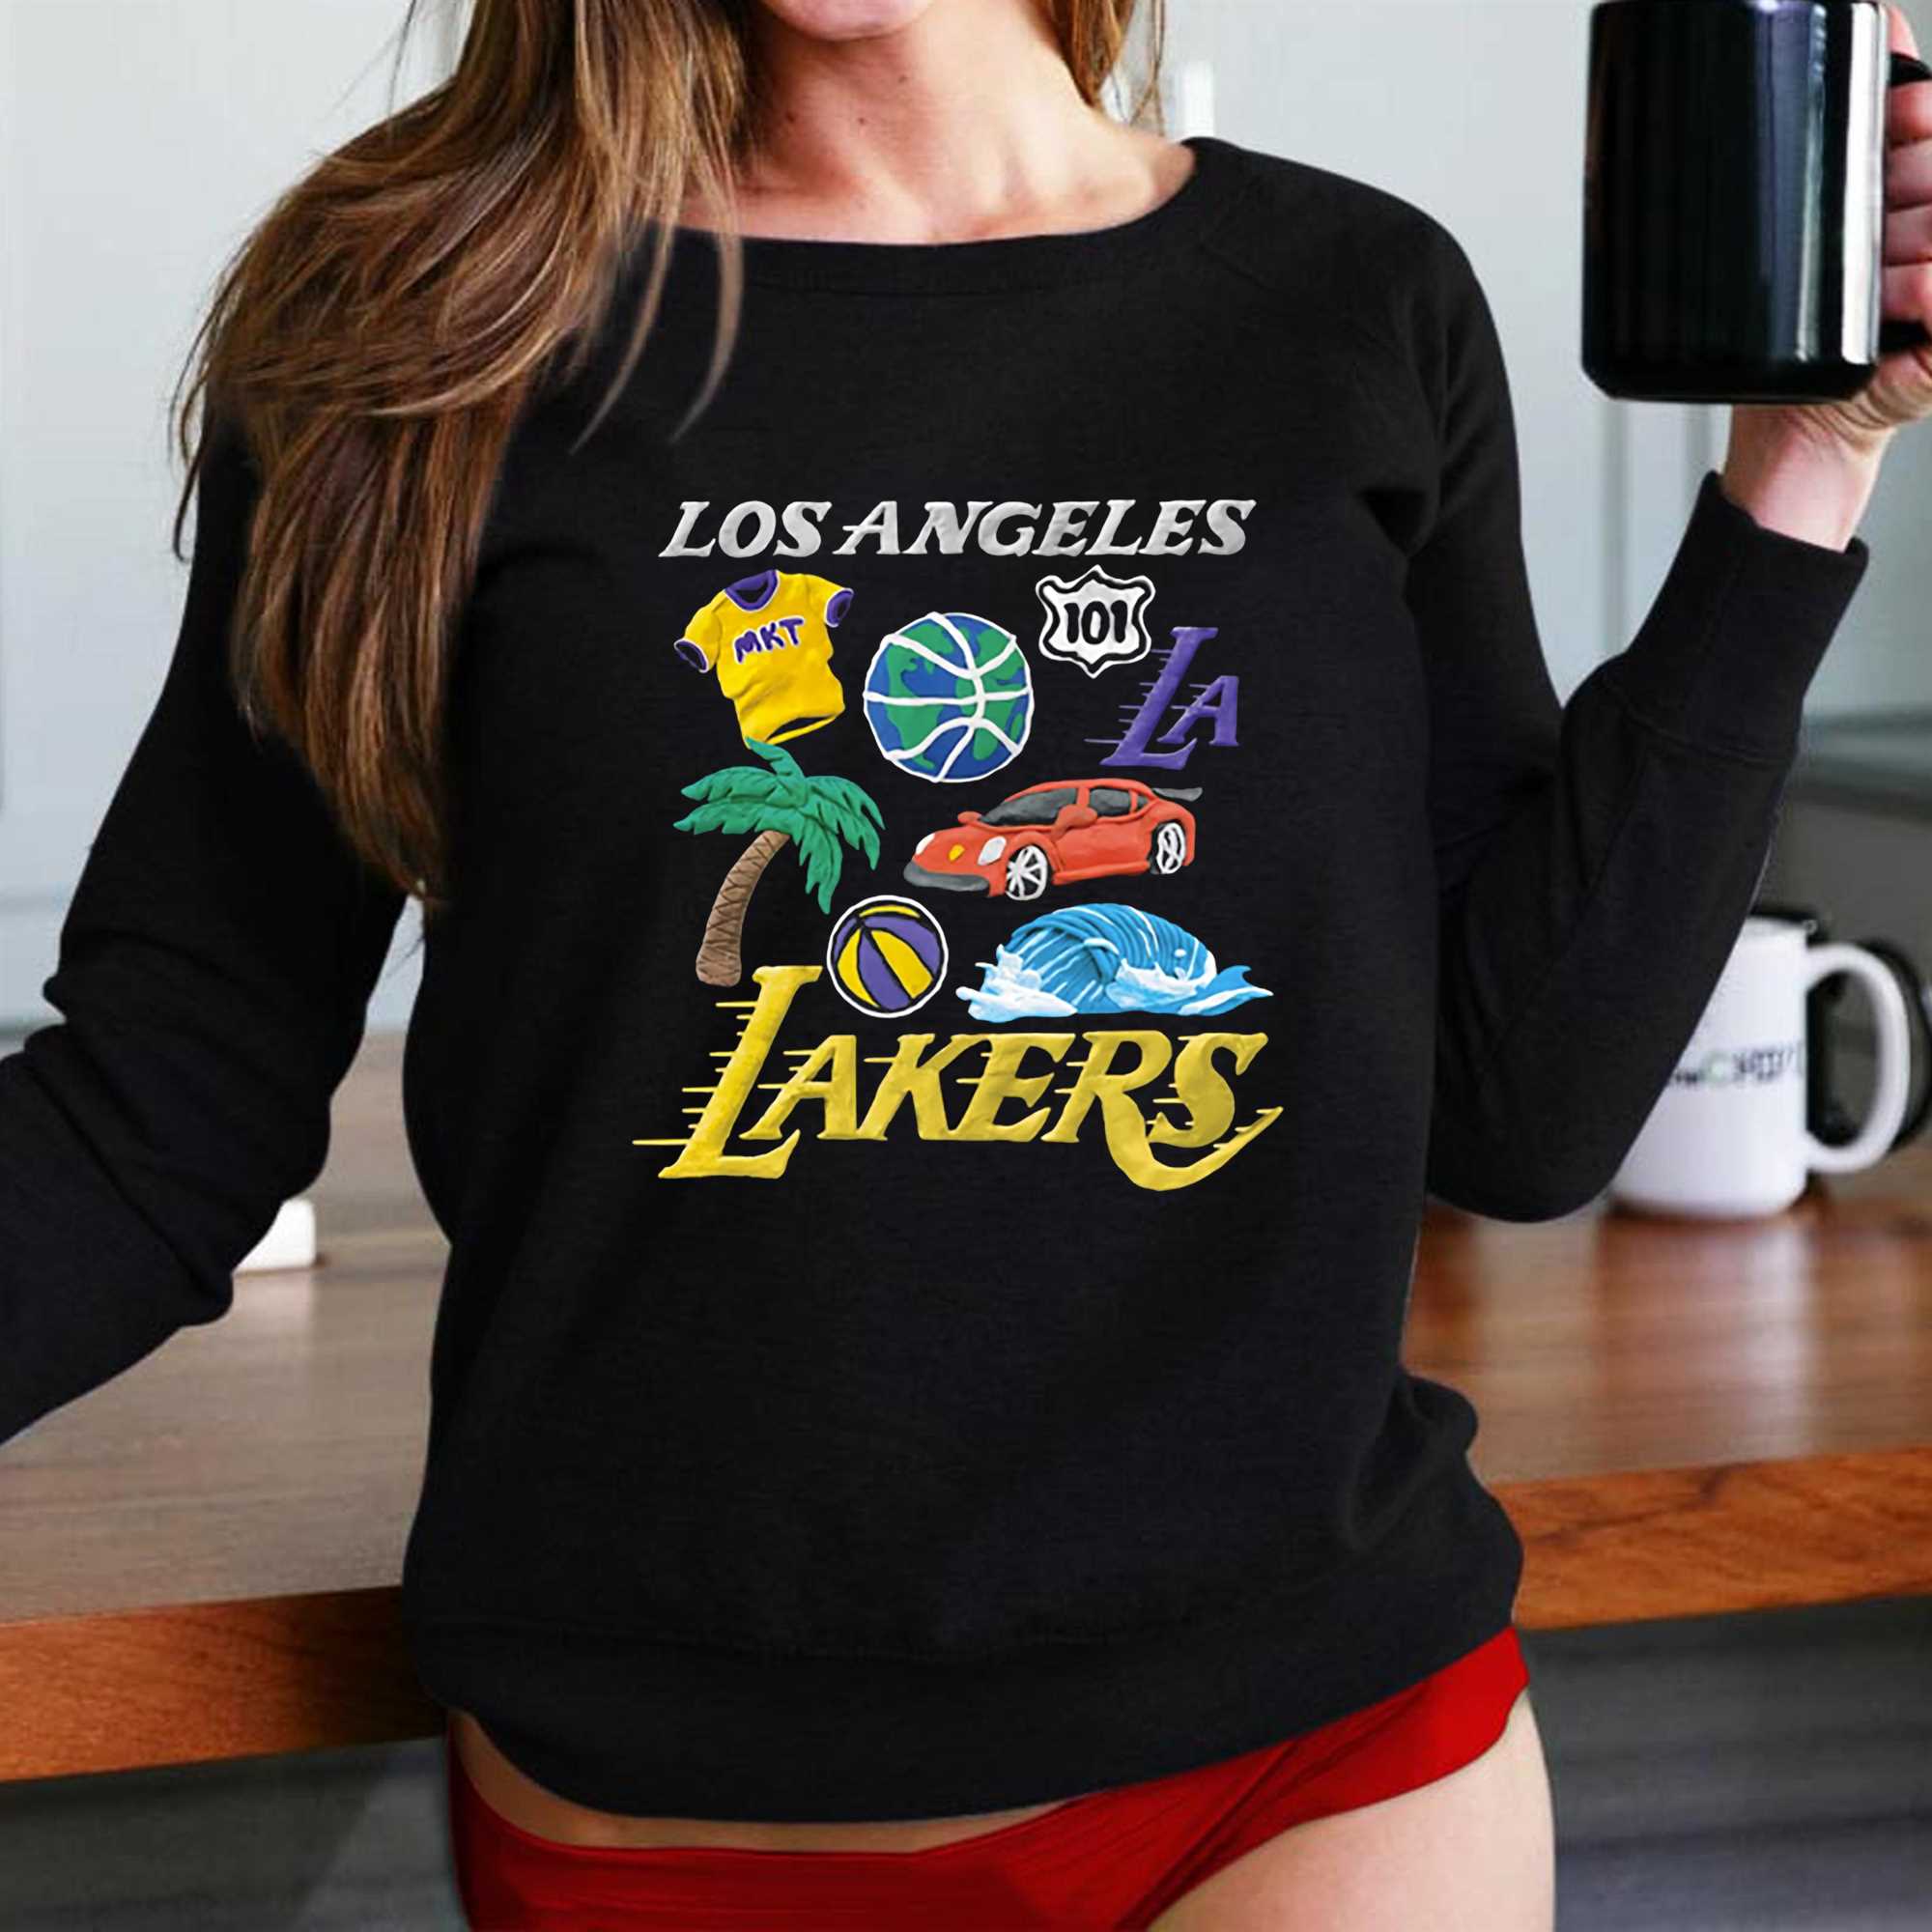 Los Angeles Lakers youth medium long sleeve